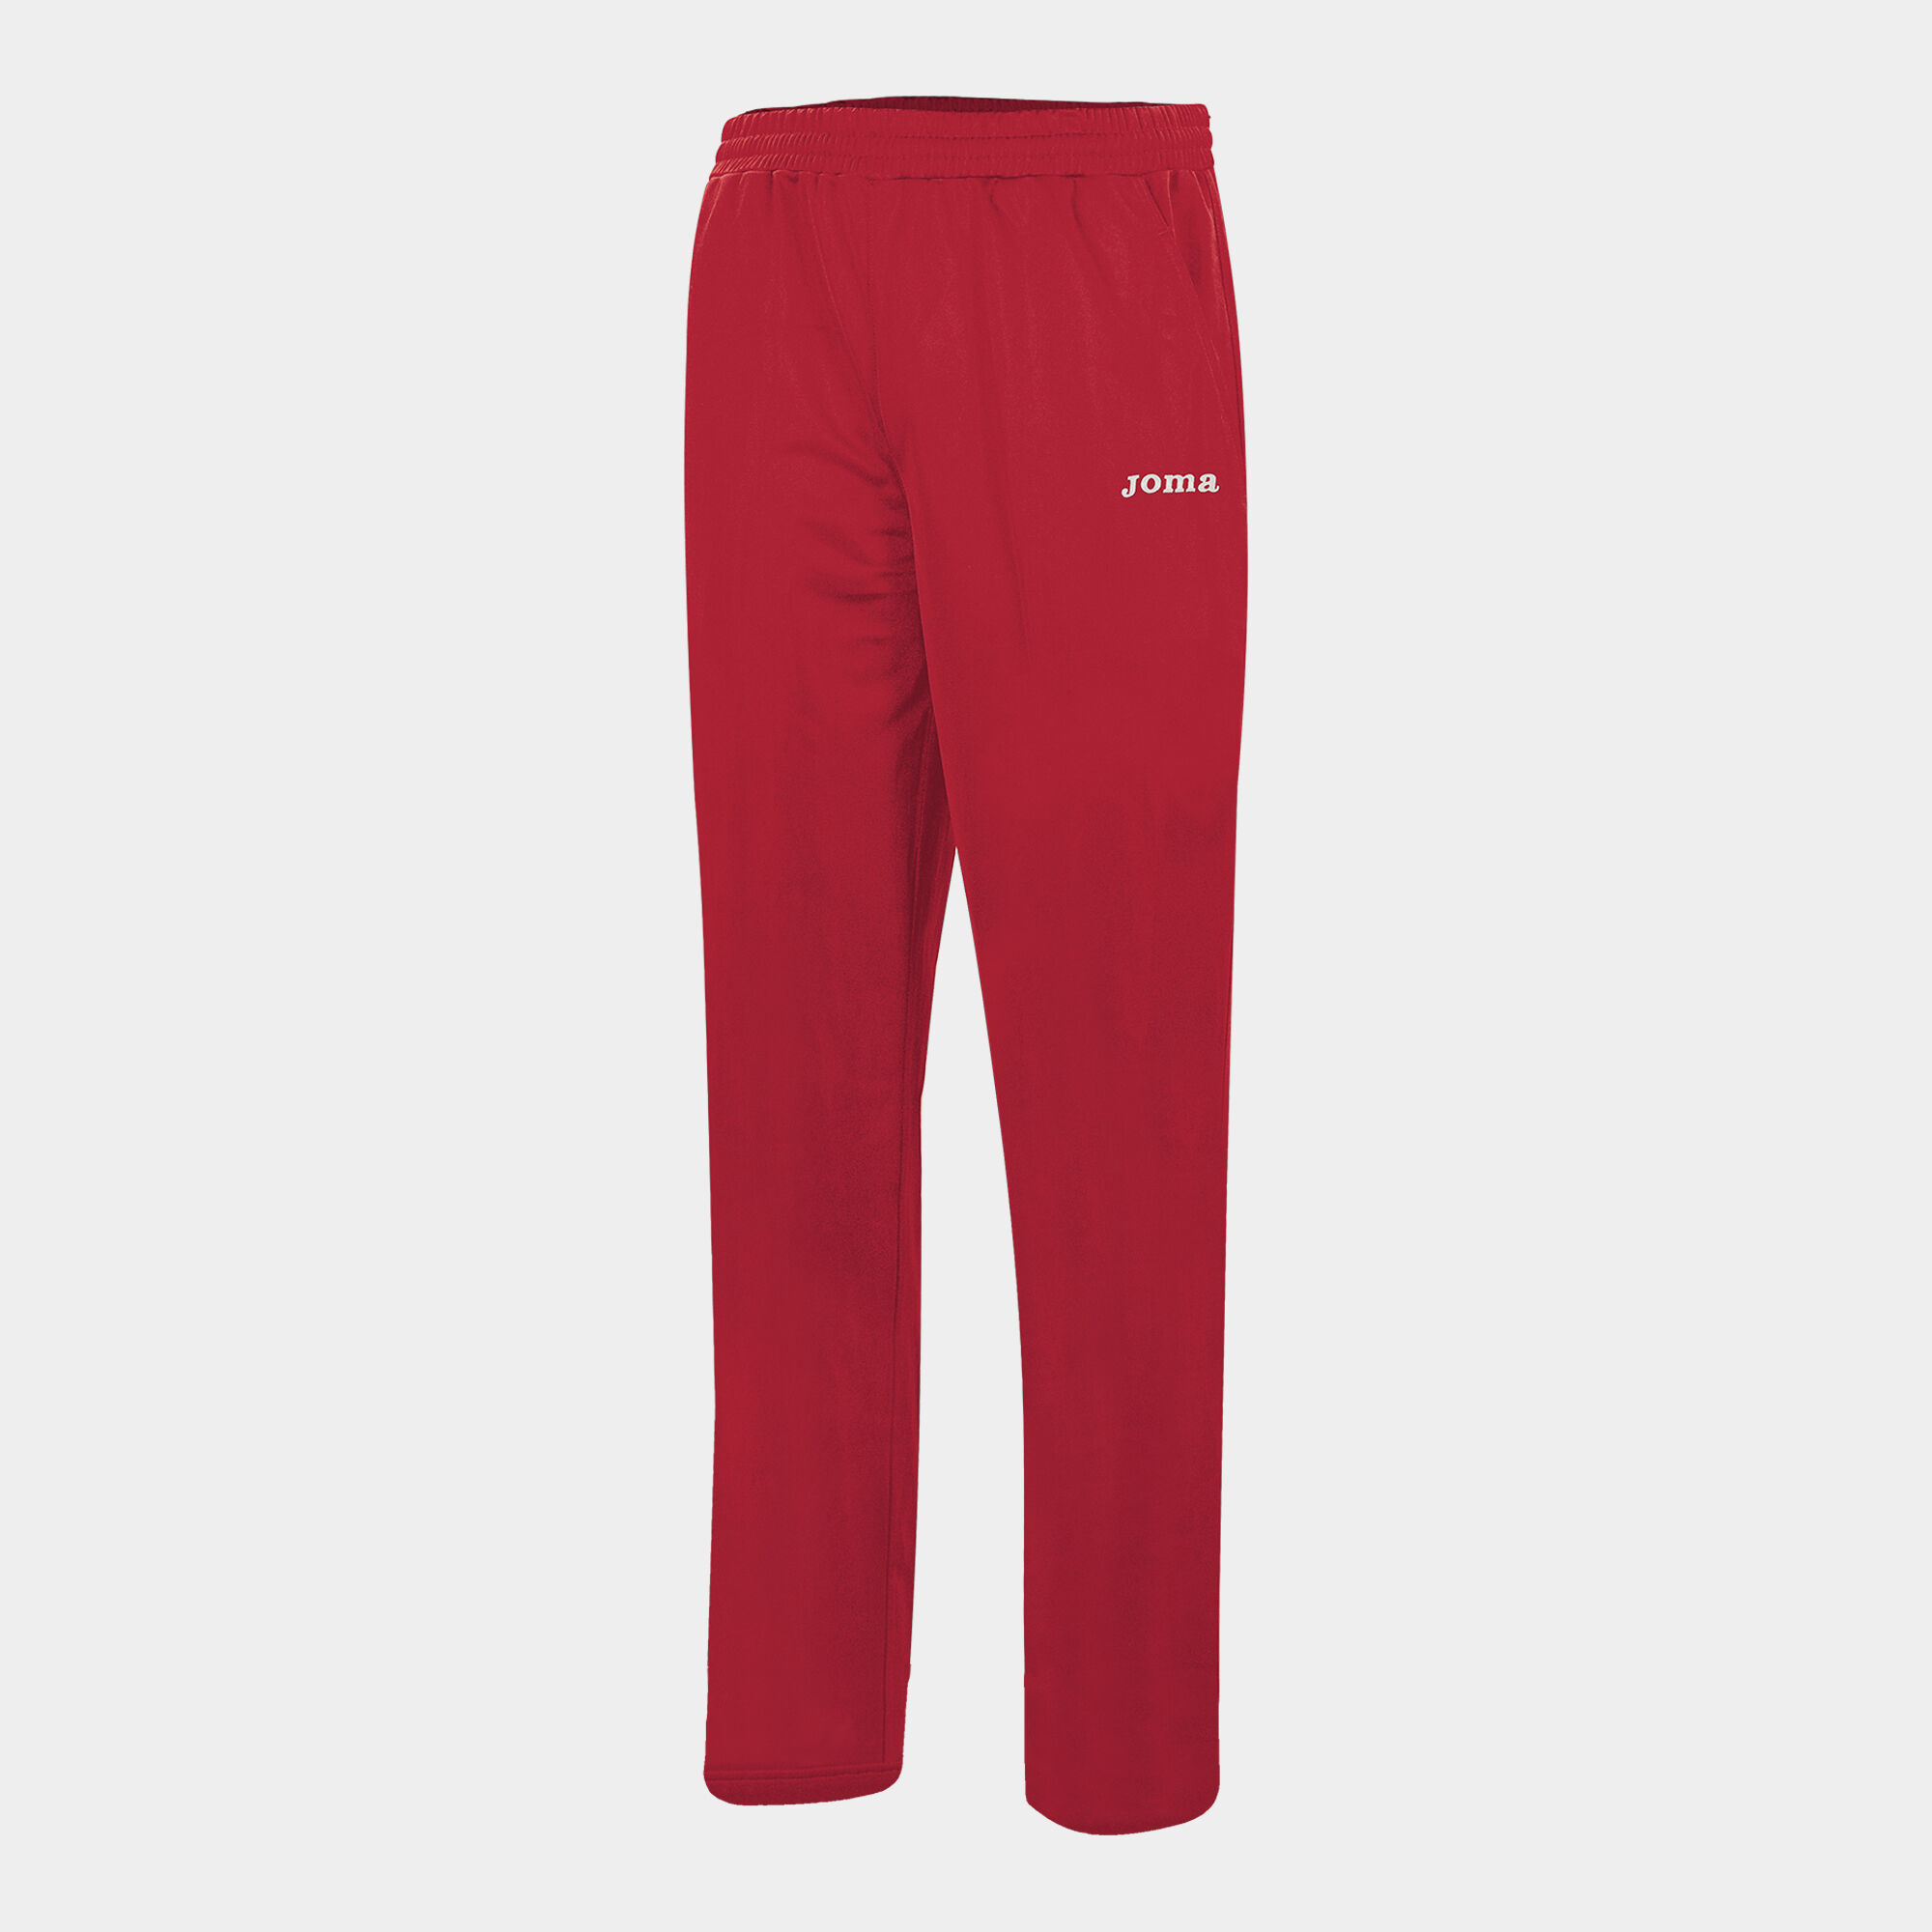 Pantalone lungo donna Team rosso